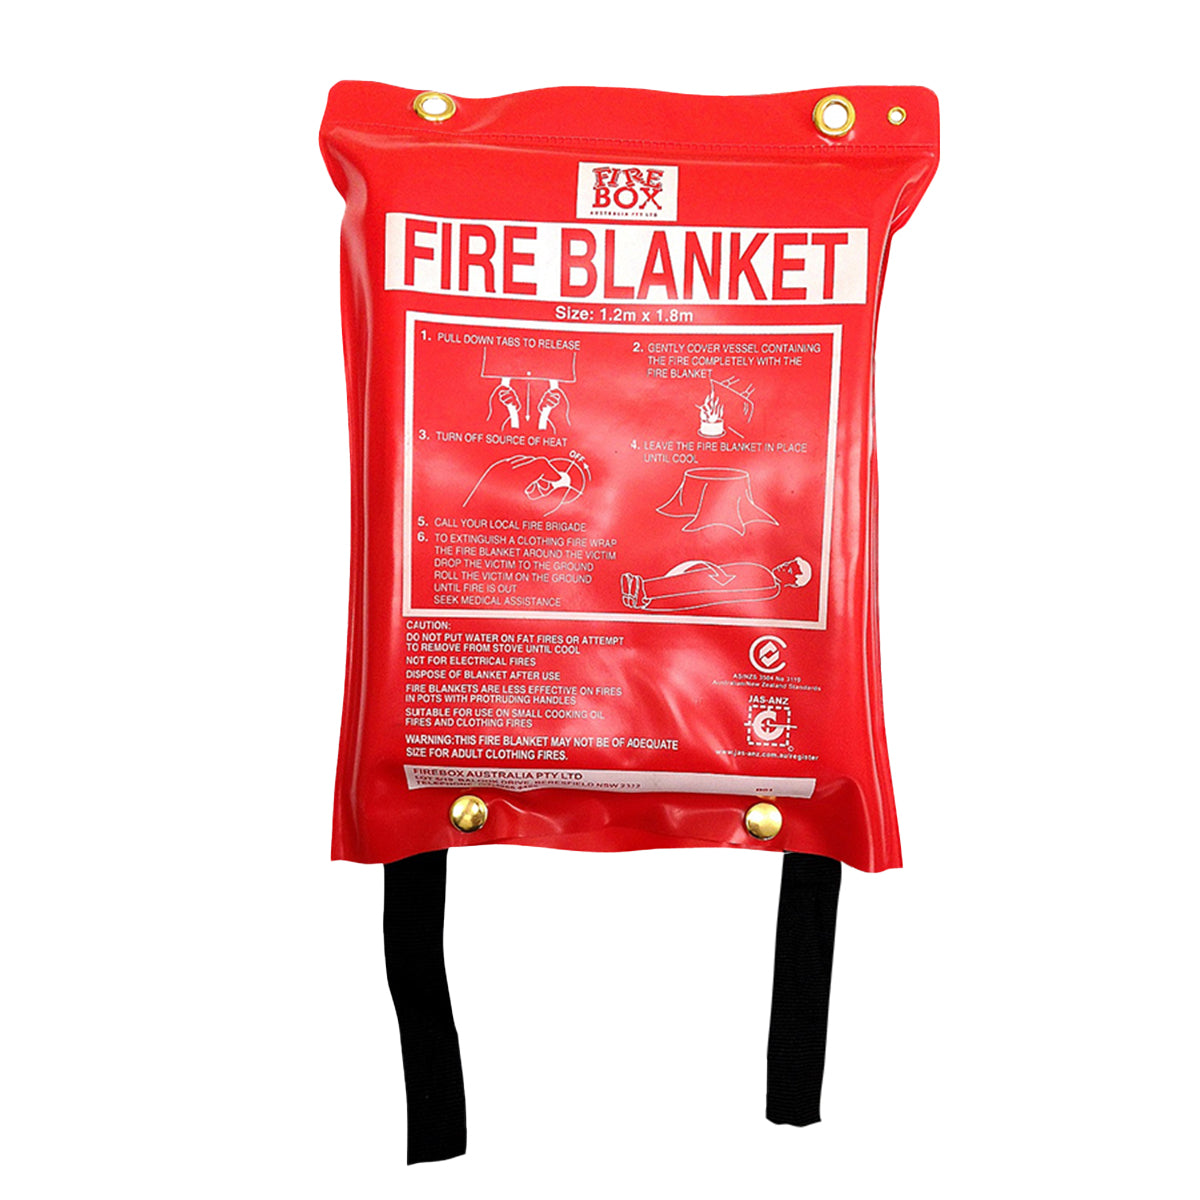 1.8m x 1.2m Fire Blanket - Premium Fire Blankets from Firebox - Shop now at Firebox Australia